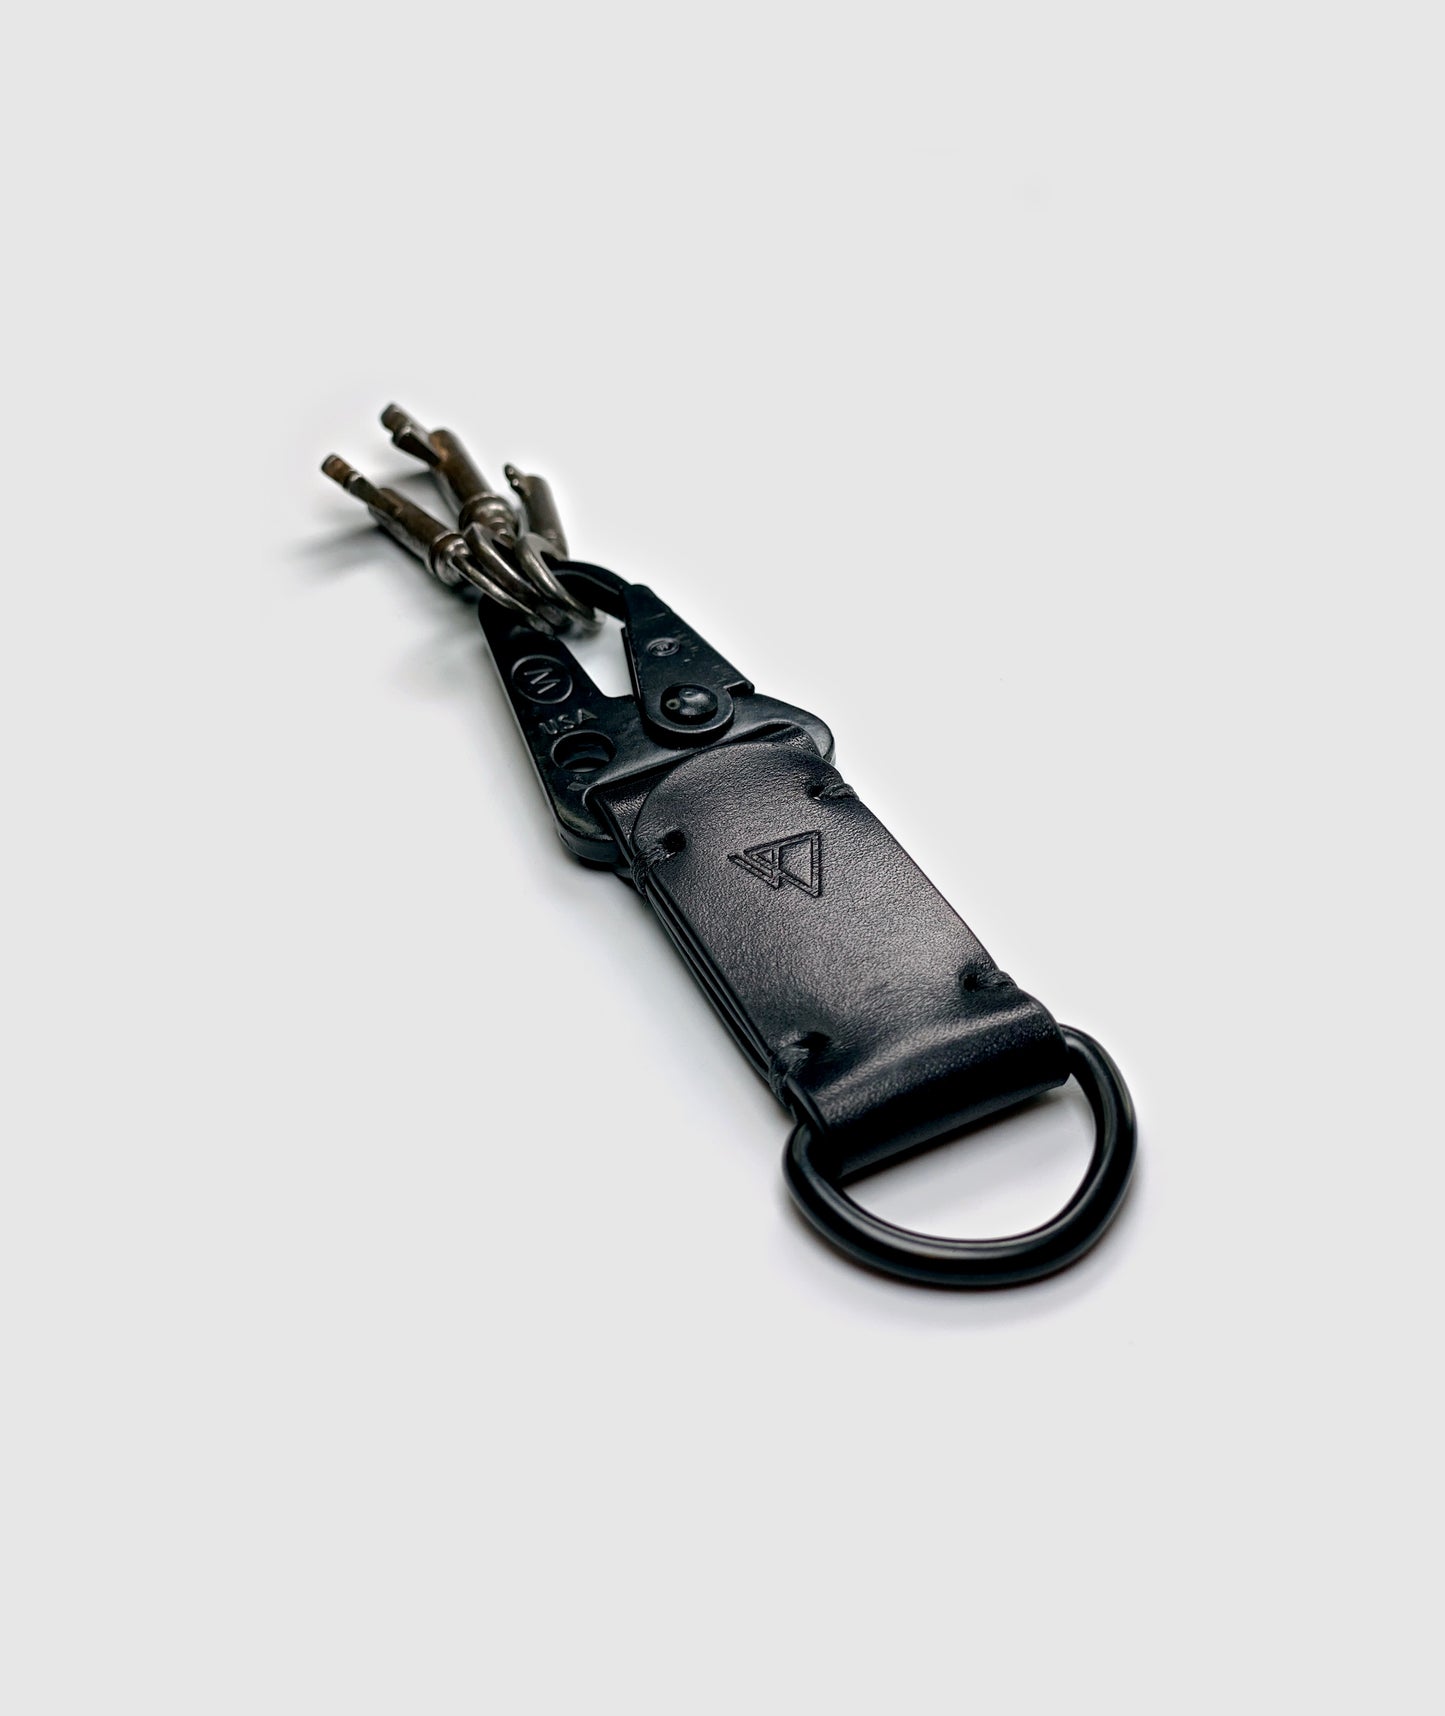 Black handmade leather snap hook keychain by darksails - porte clefs fait main en cuir noir